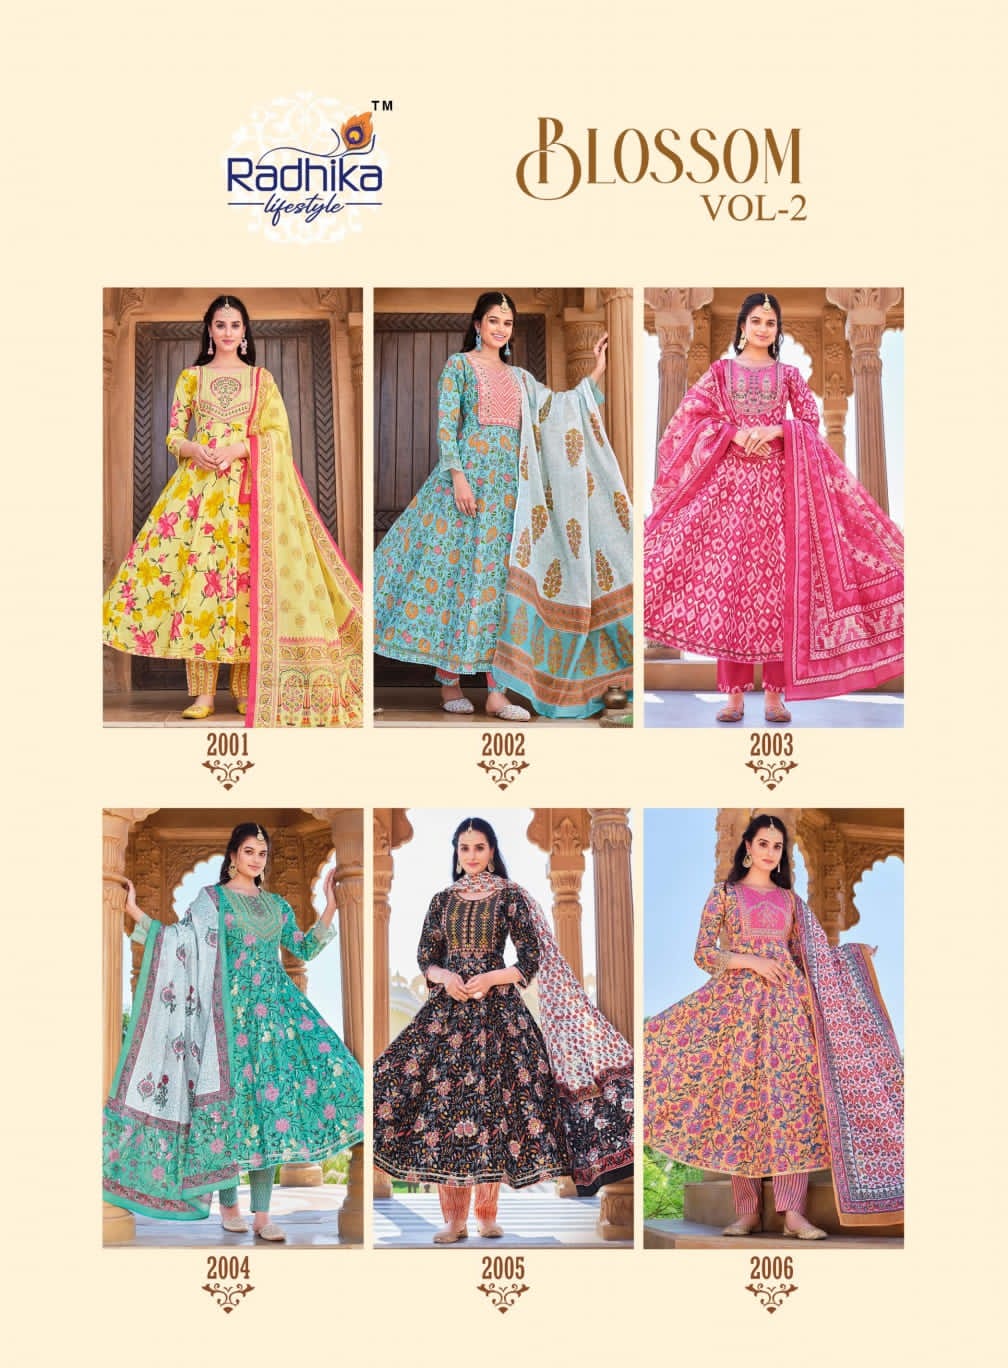 Radhika Blossom Vol 2 collection 9